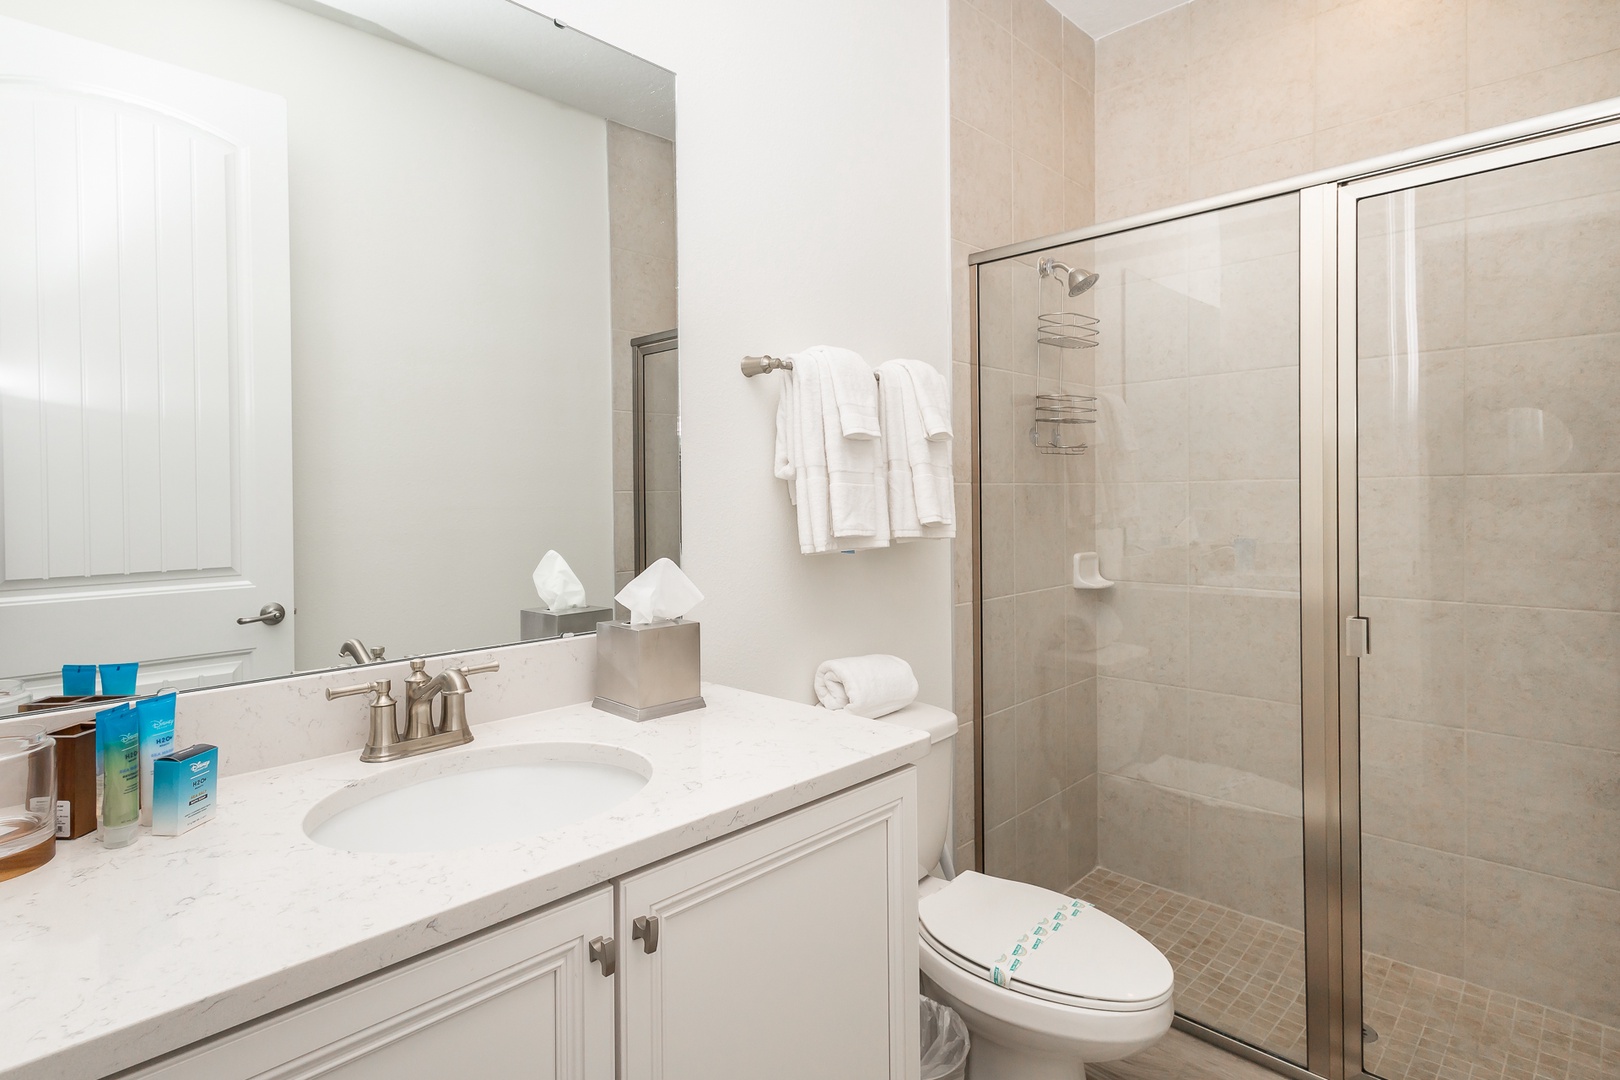 The 1st floor full bathroom offers a single vanity & glass shower